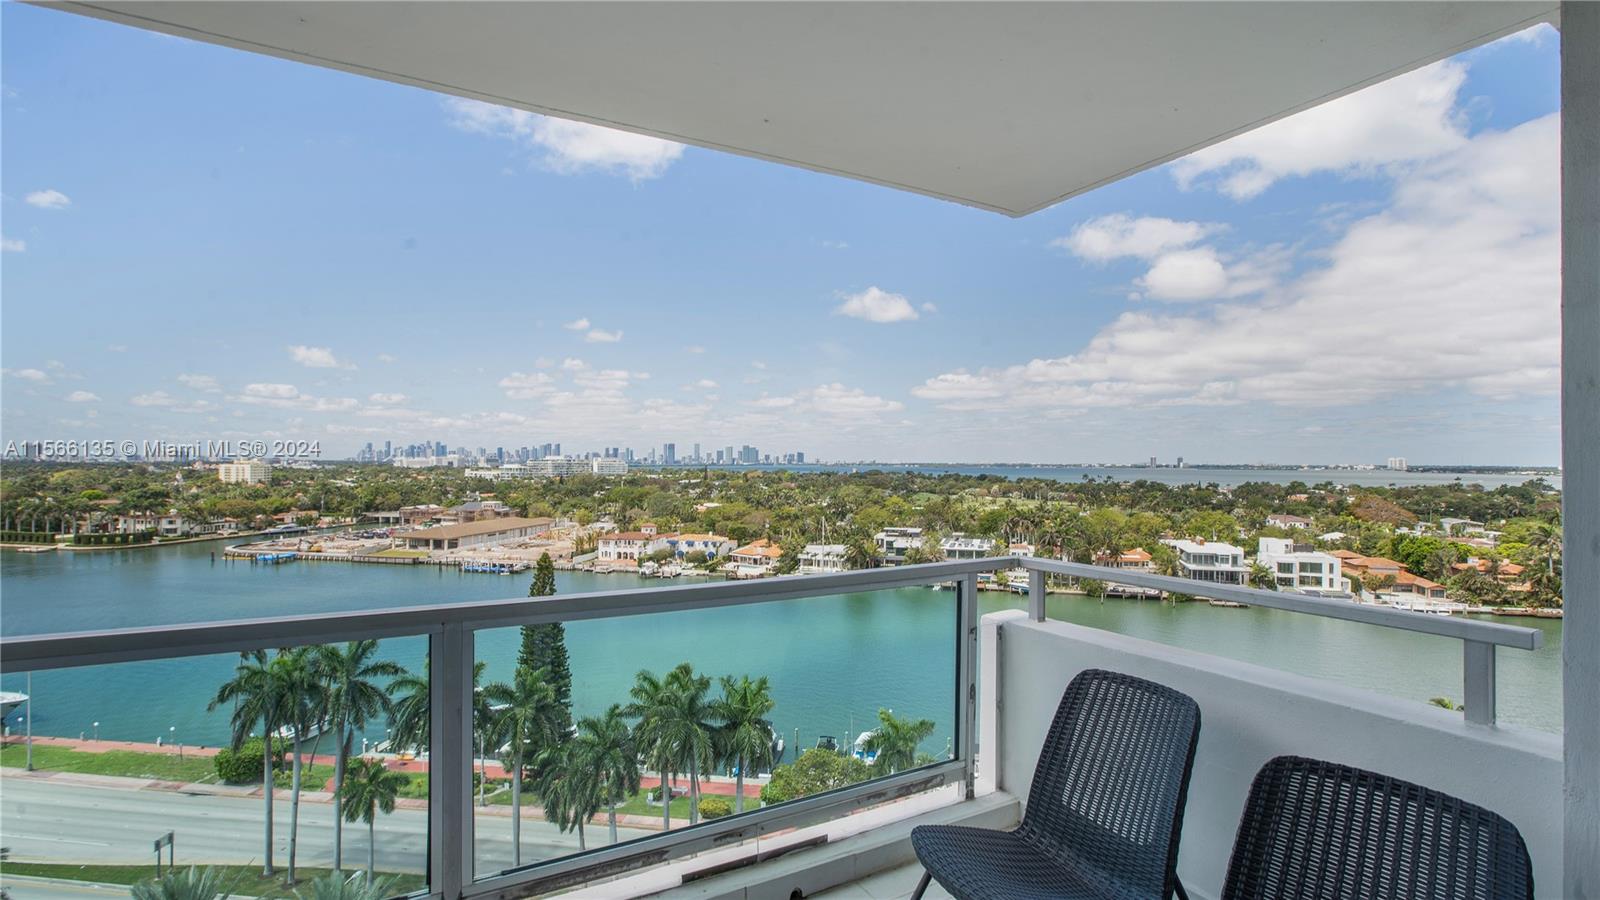 Rental Property at 5161 Collins Ave 1406, Miami Beach, Miami-Dade County, Florida - Bedrooms: 2 
Bathrooms: 2  - $4,000 MO.